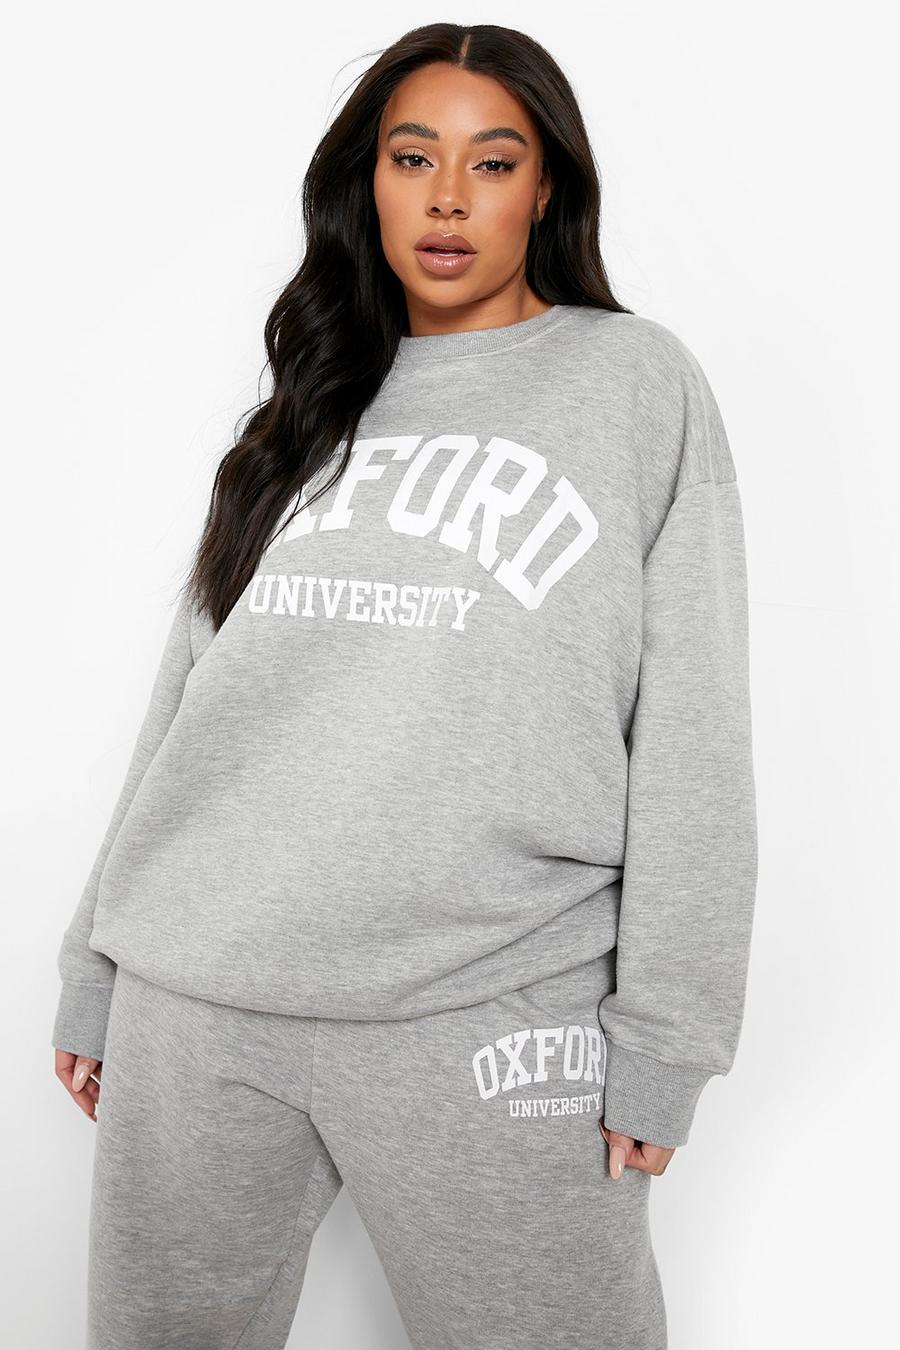 Plus Oversize Oxford University Sweatshirt, Grey gris